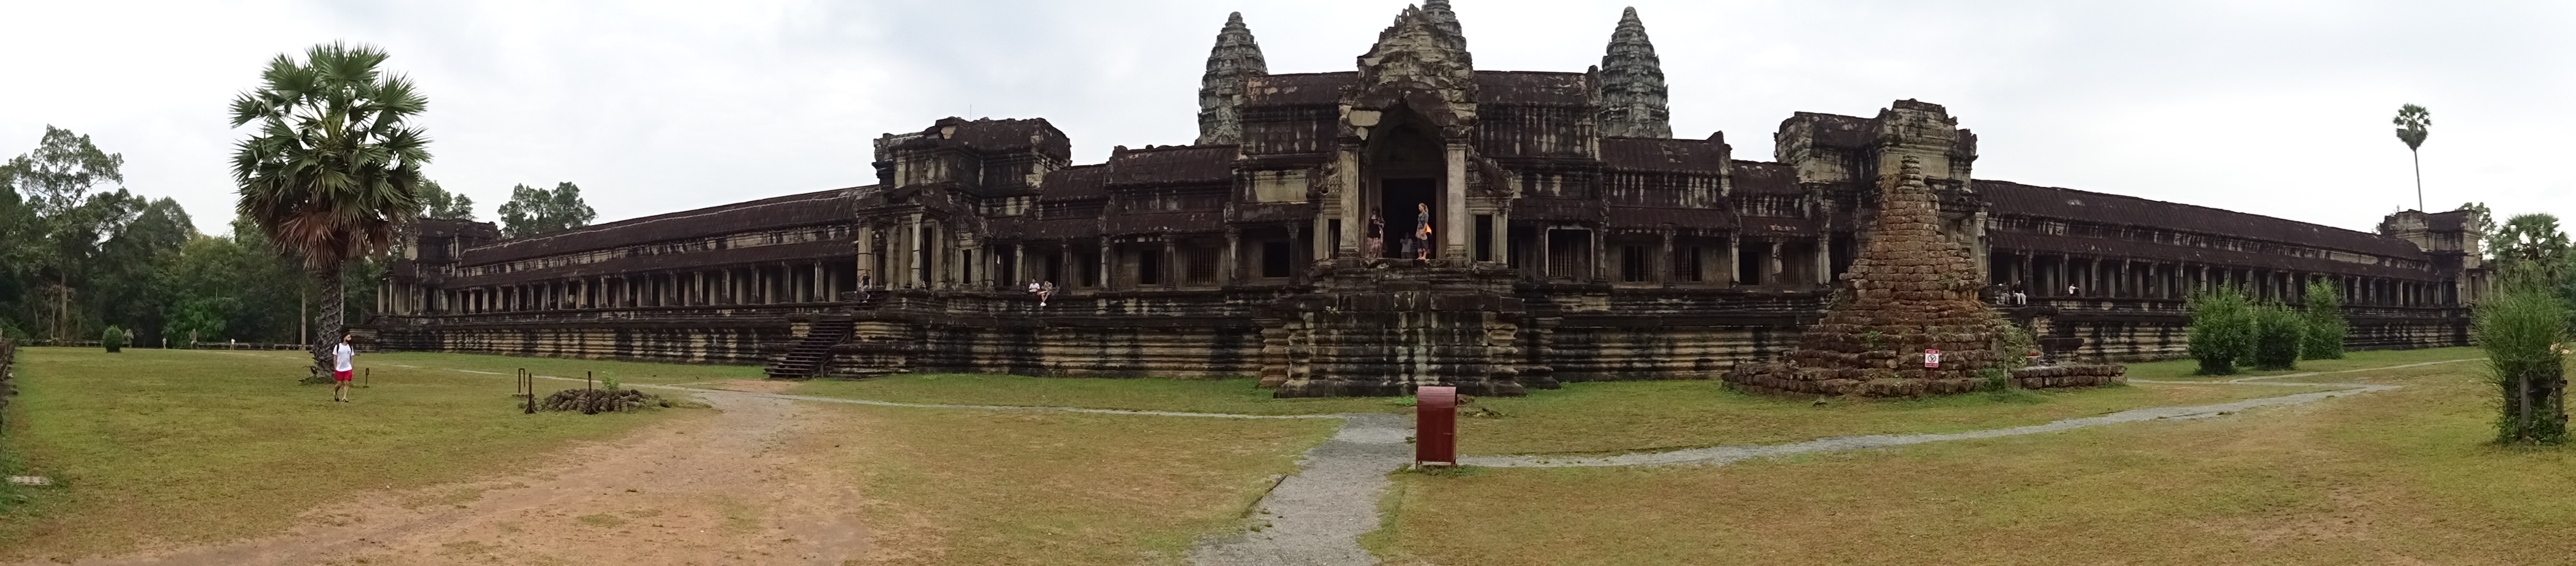 Panorama der Tempelstadt Angkor Wat